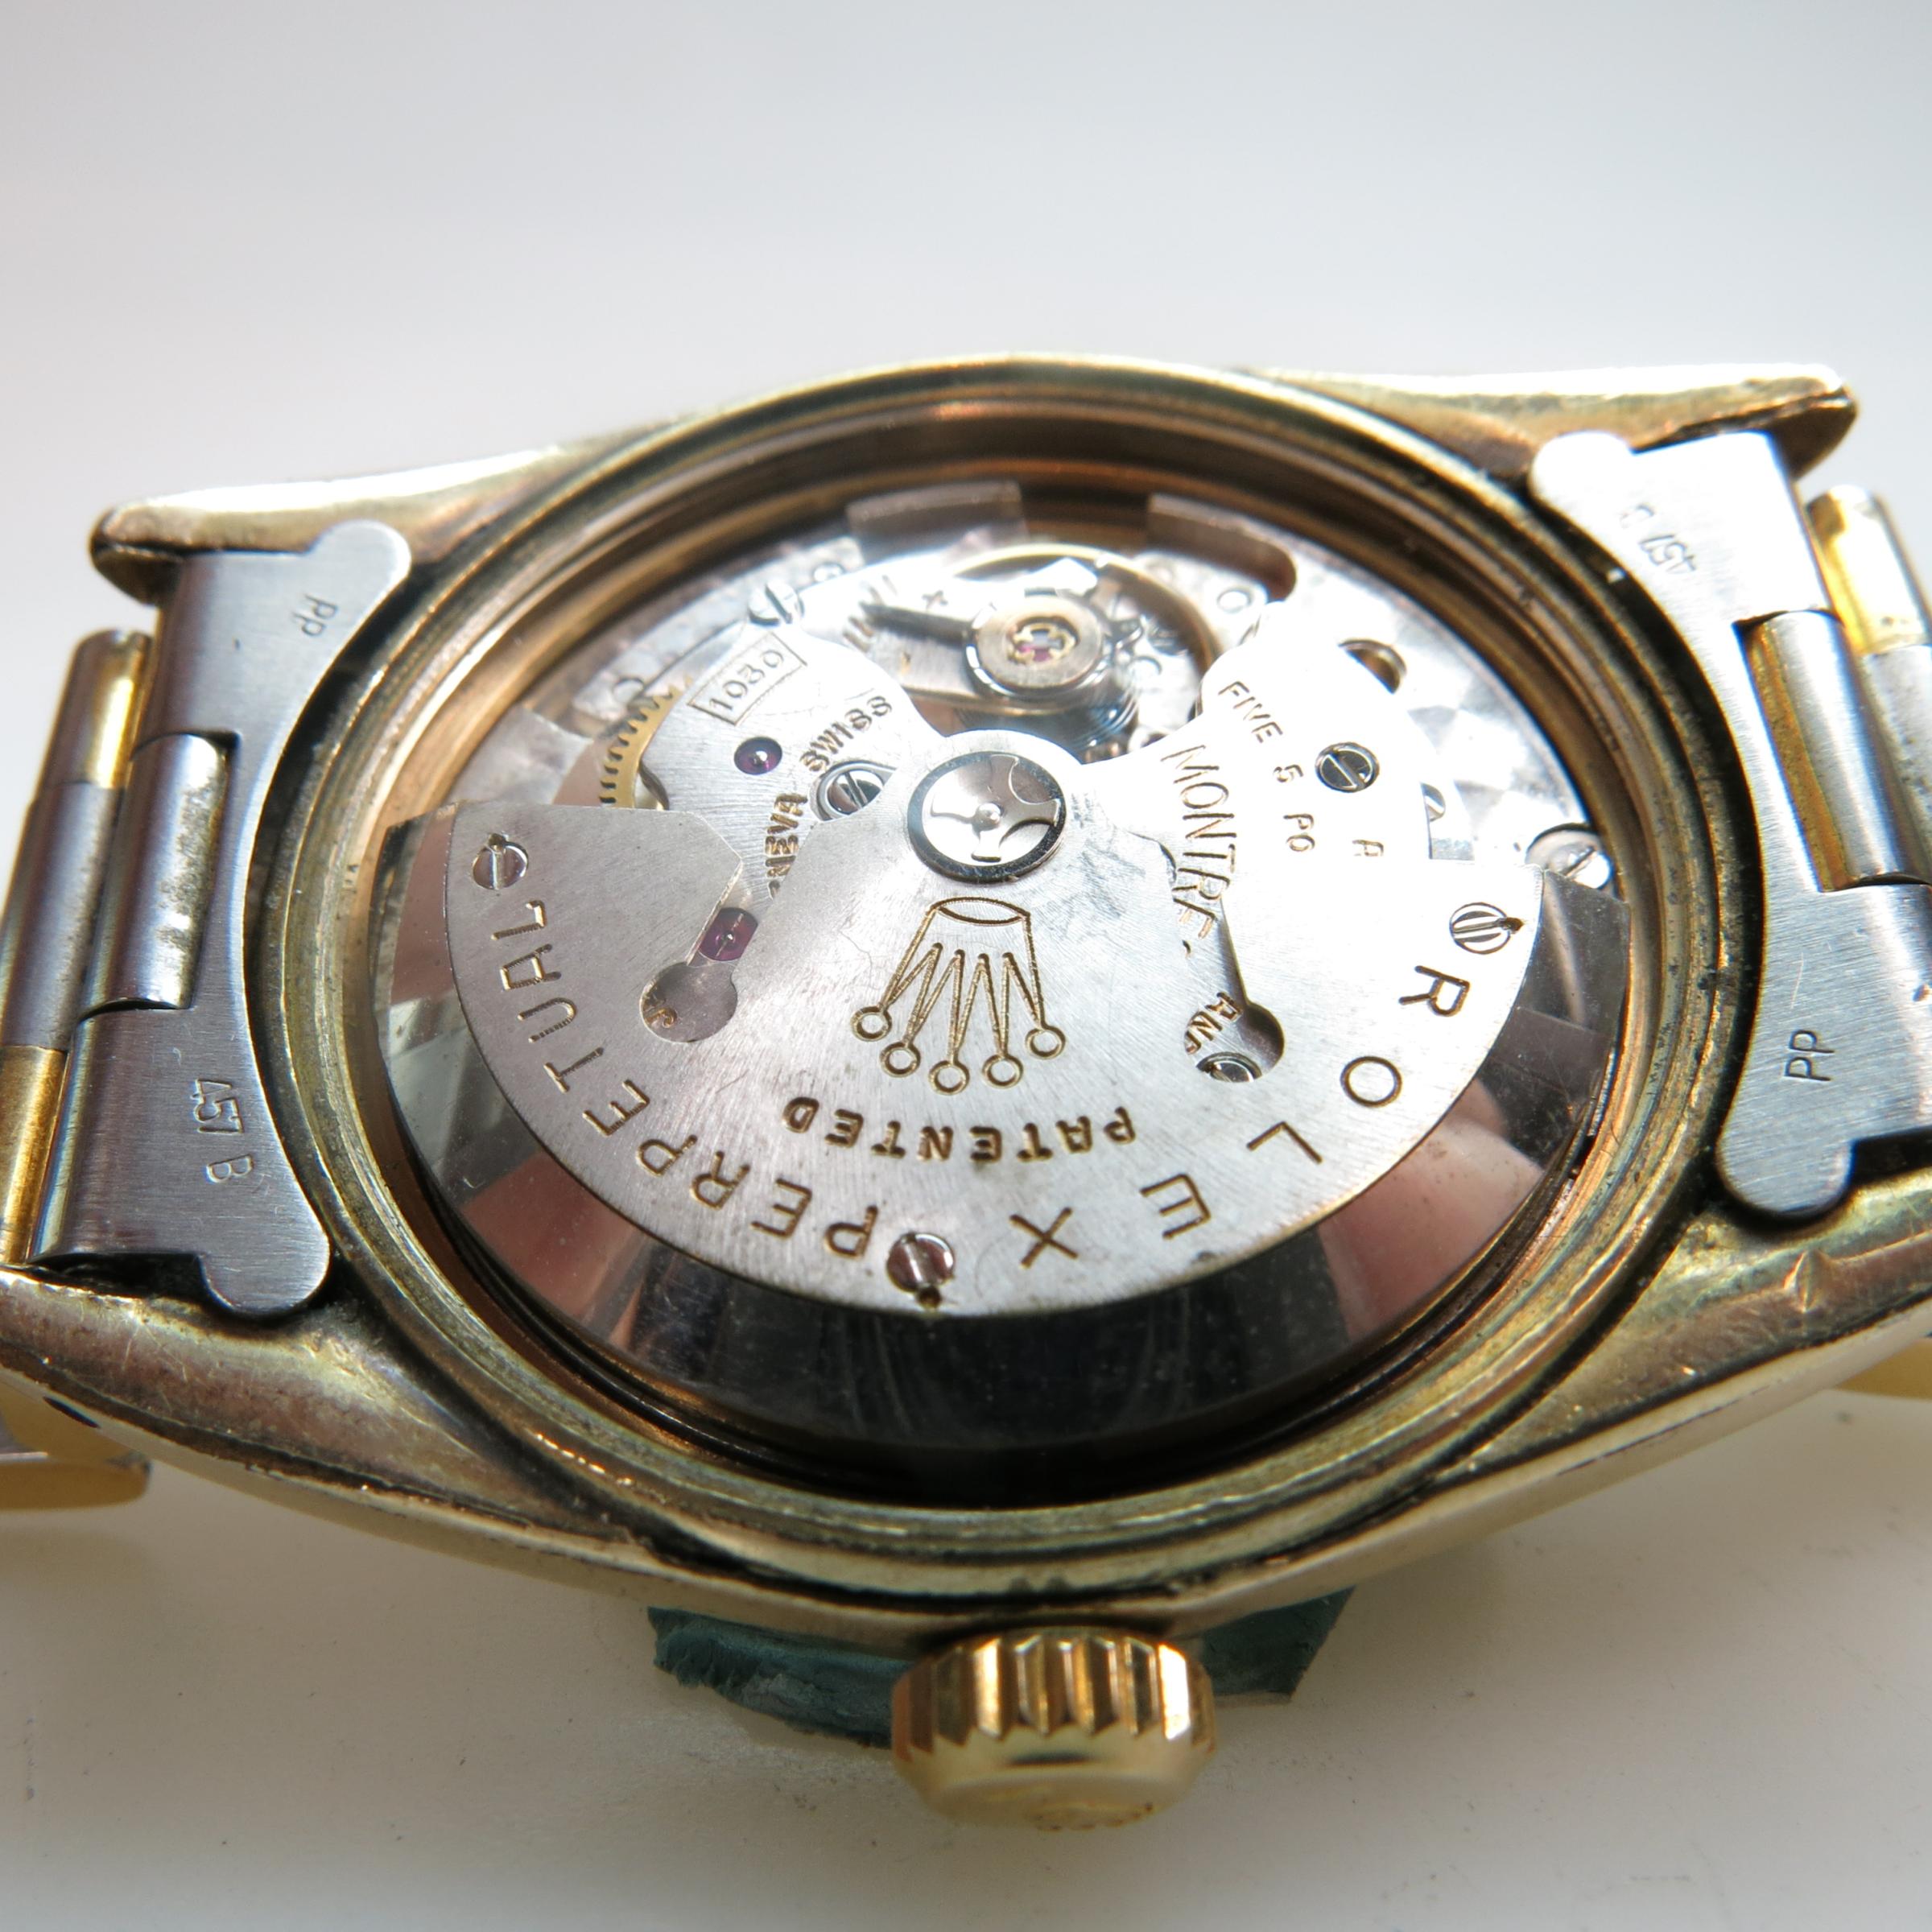 Rolex Oyster Perpetual Precision "Meritus" Wristwatch